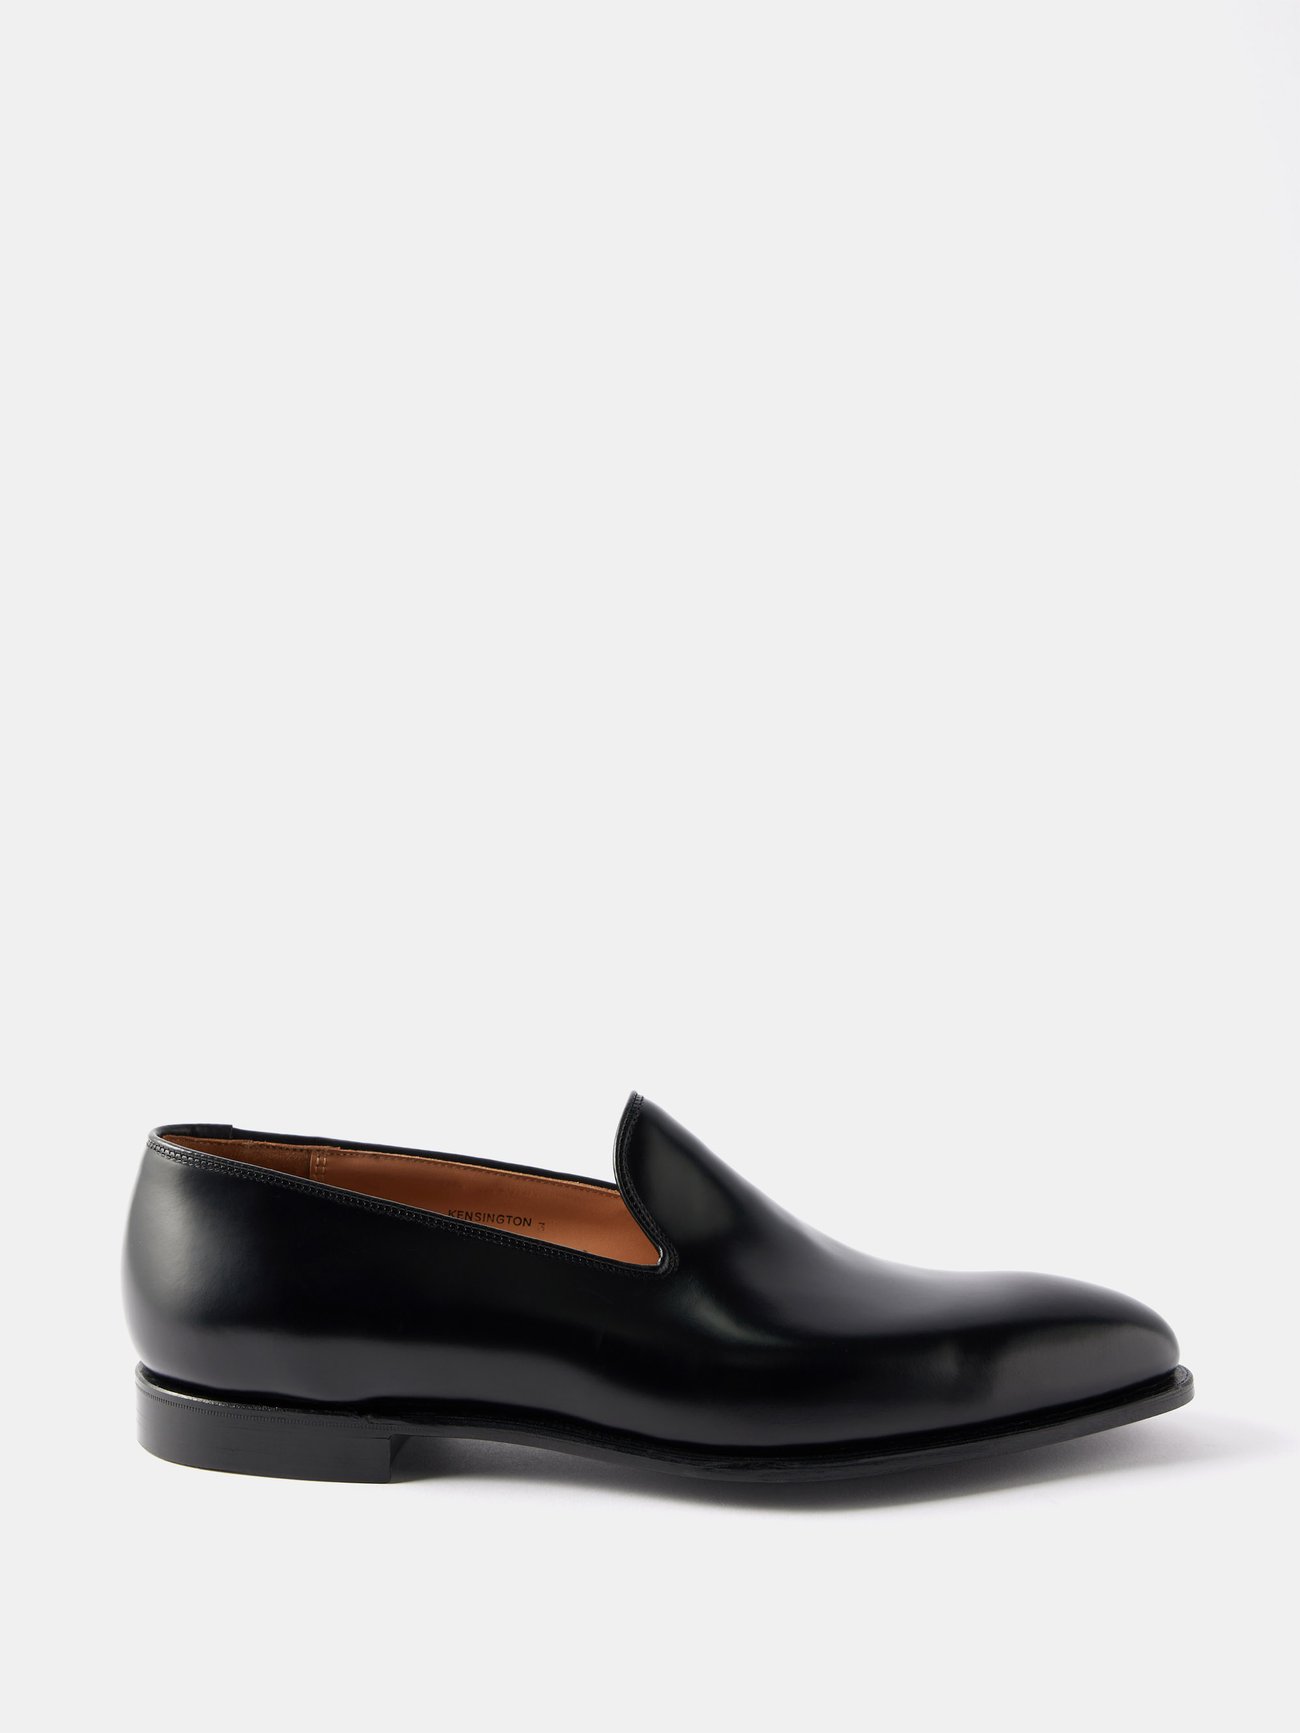 Kensington leather loafers